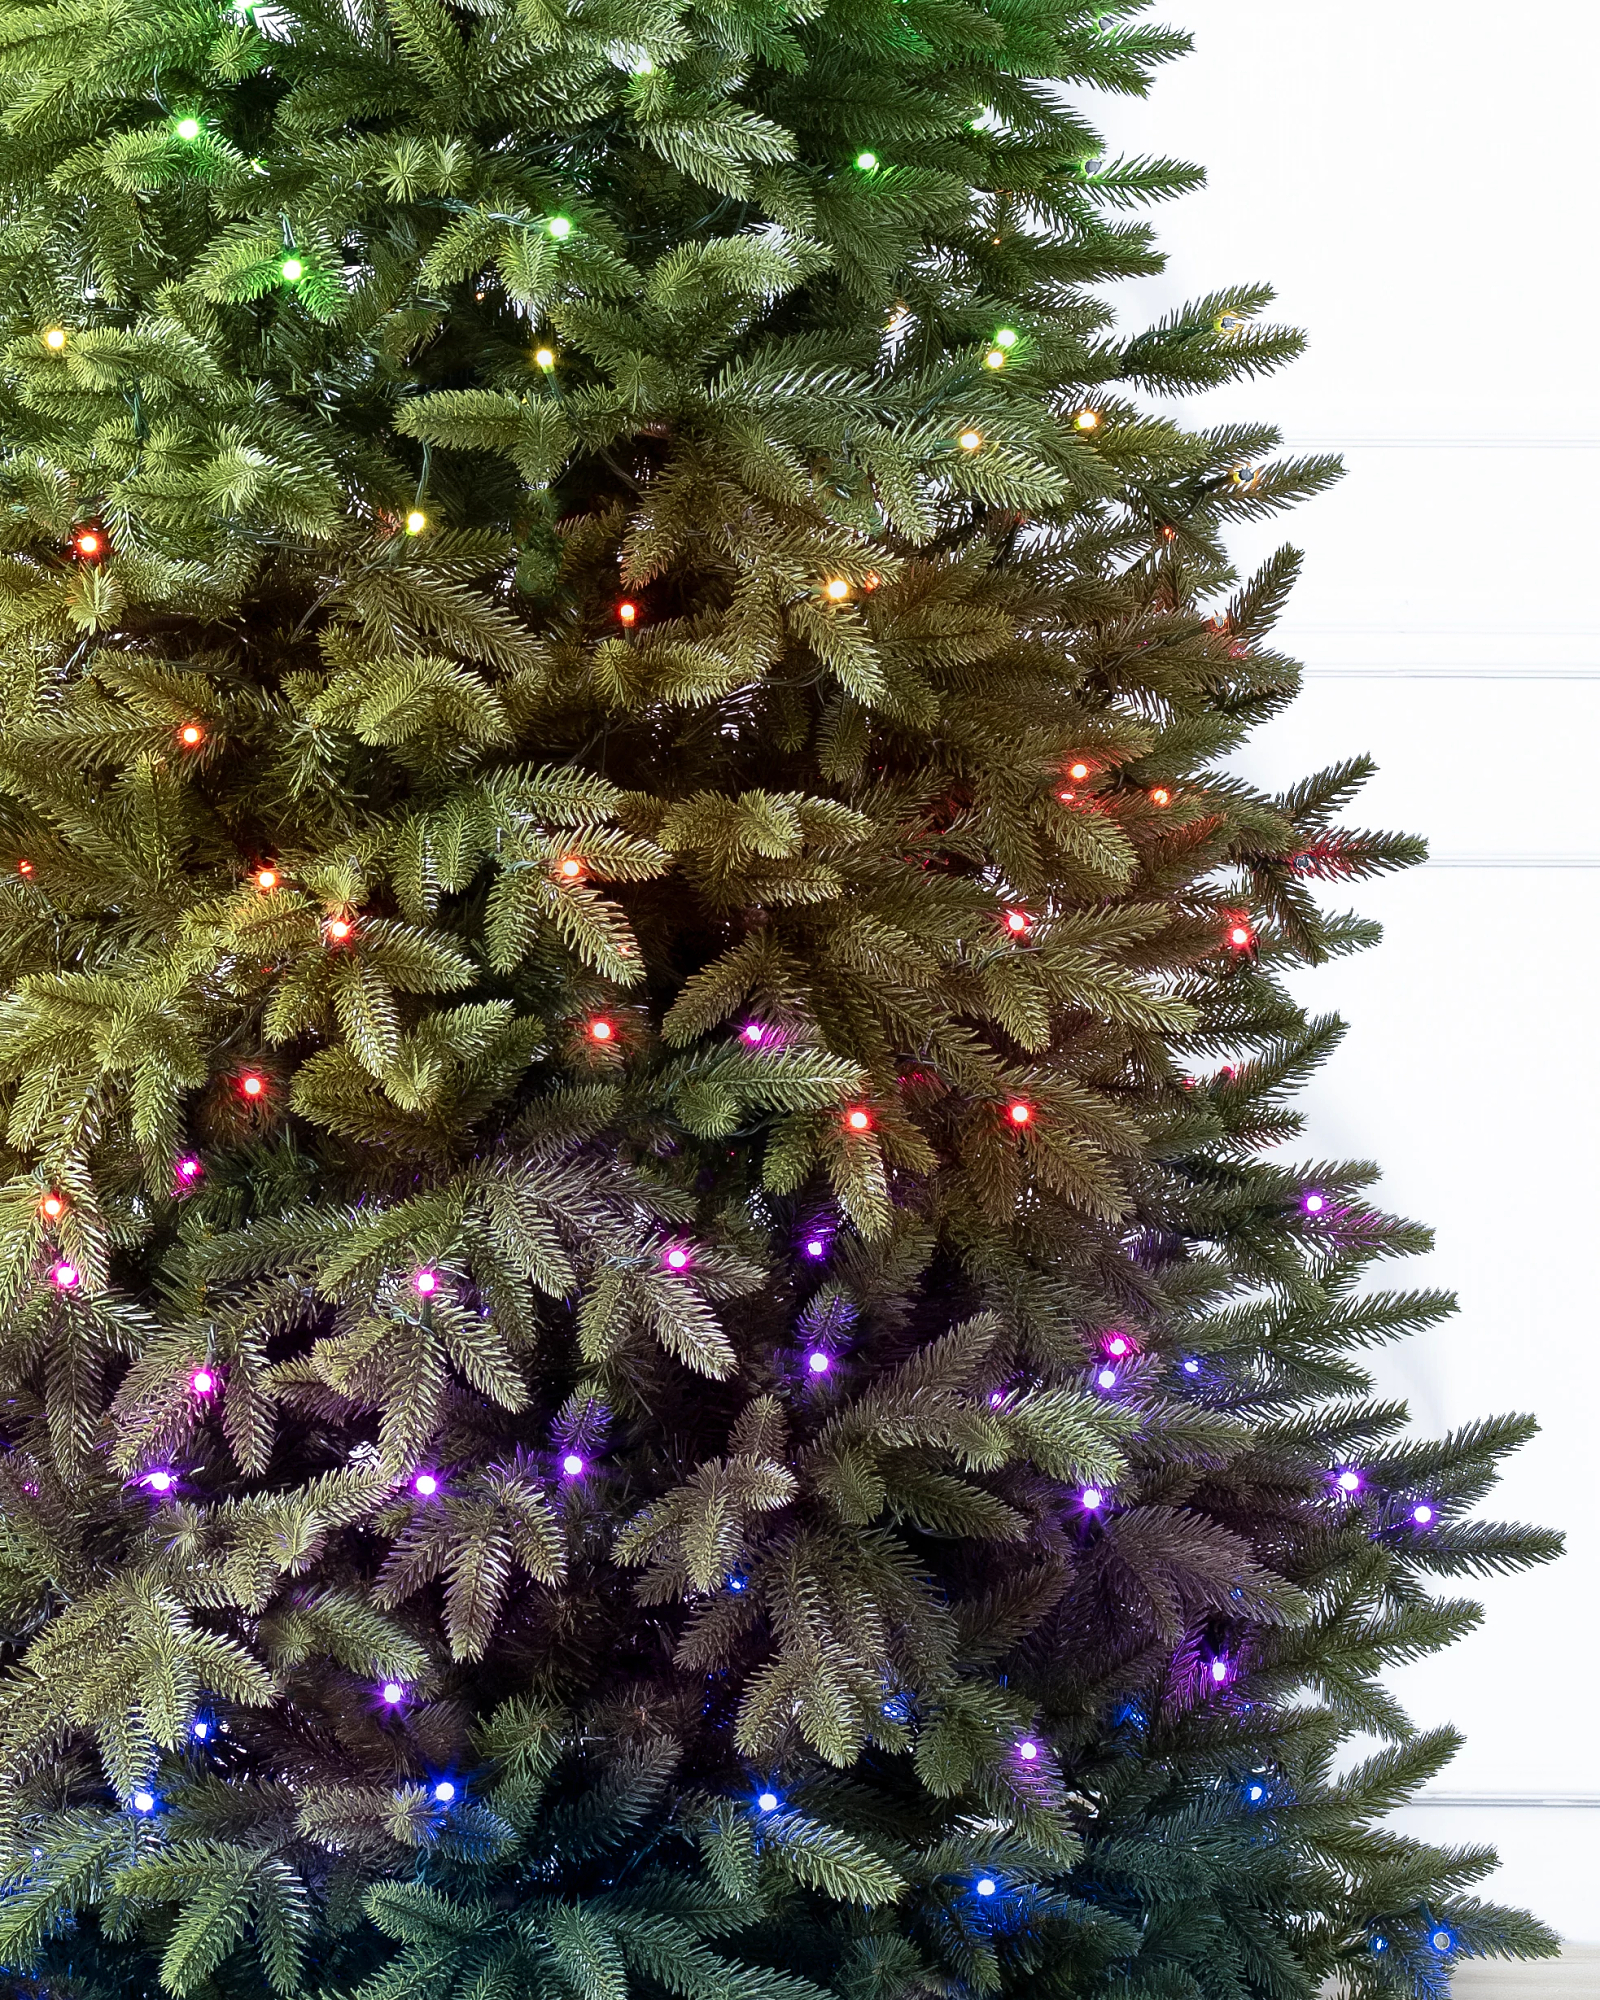 https://source.widen.net/content/qklukizkiq/jpeg/Silverado-Slim-Artificial-Christmas-Tree_Twinkly_Closeup-10.jpeg?w=1600&h=2000&keep=c&crop=yes&color=cccccc&quality=100&u=7mzq6p